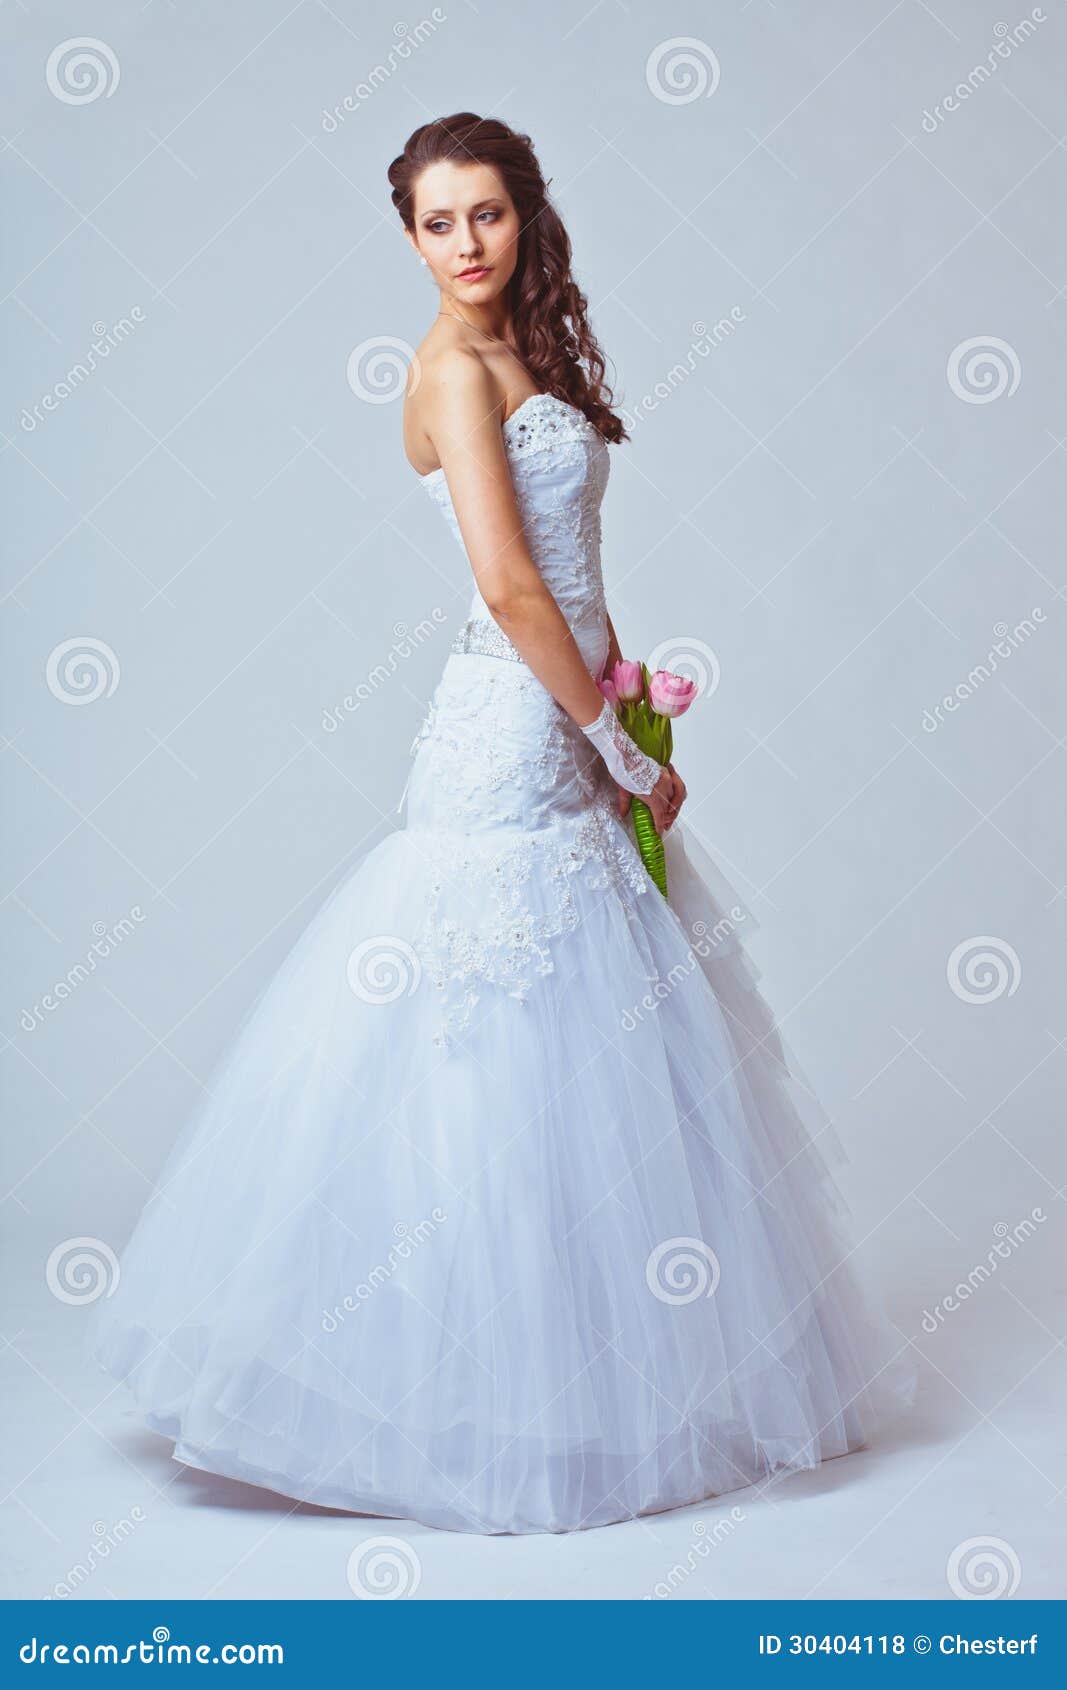 Of Flyleaf Single Beautiful Bride 38